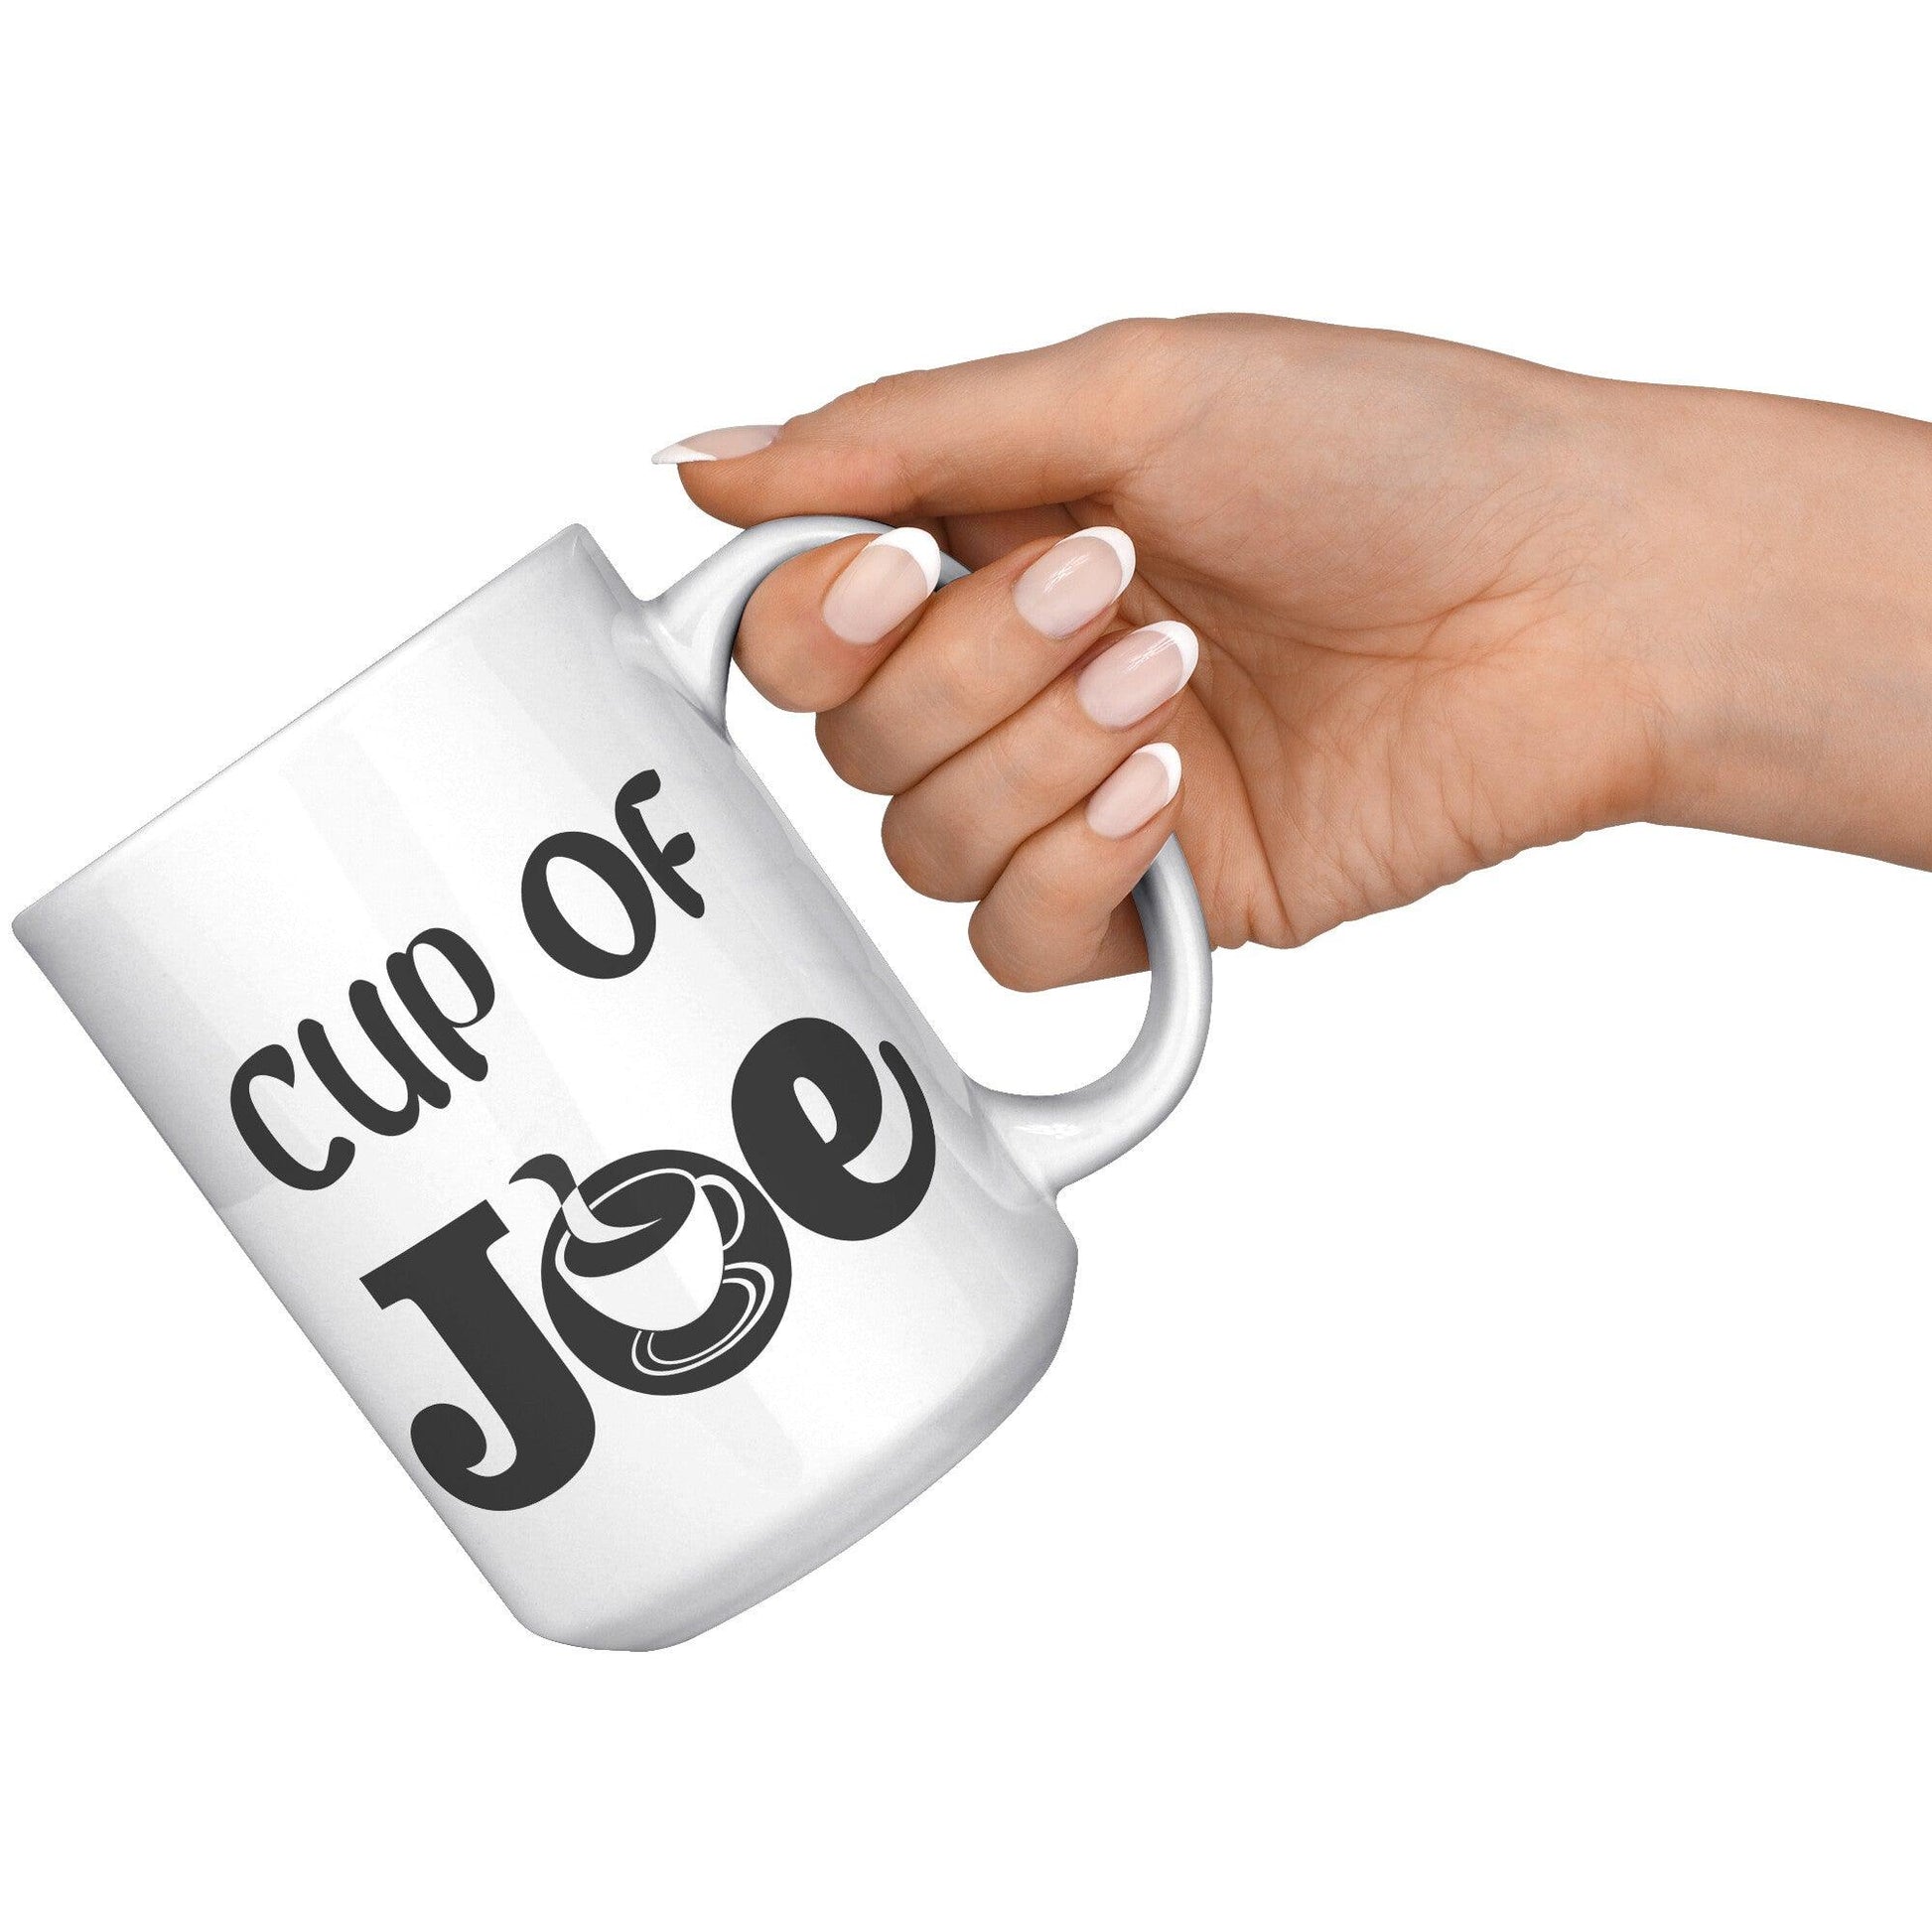 Cup Of Joe White Mug - TheGivenGet